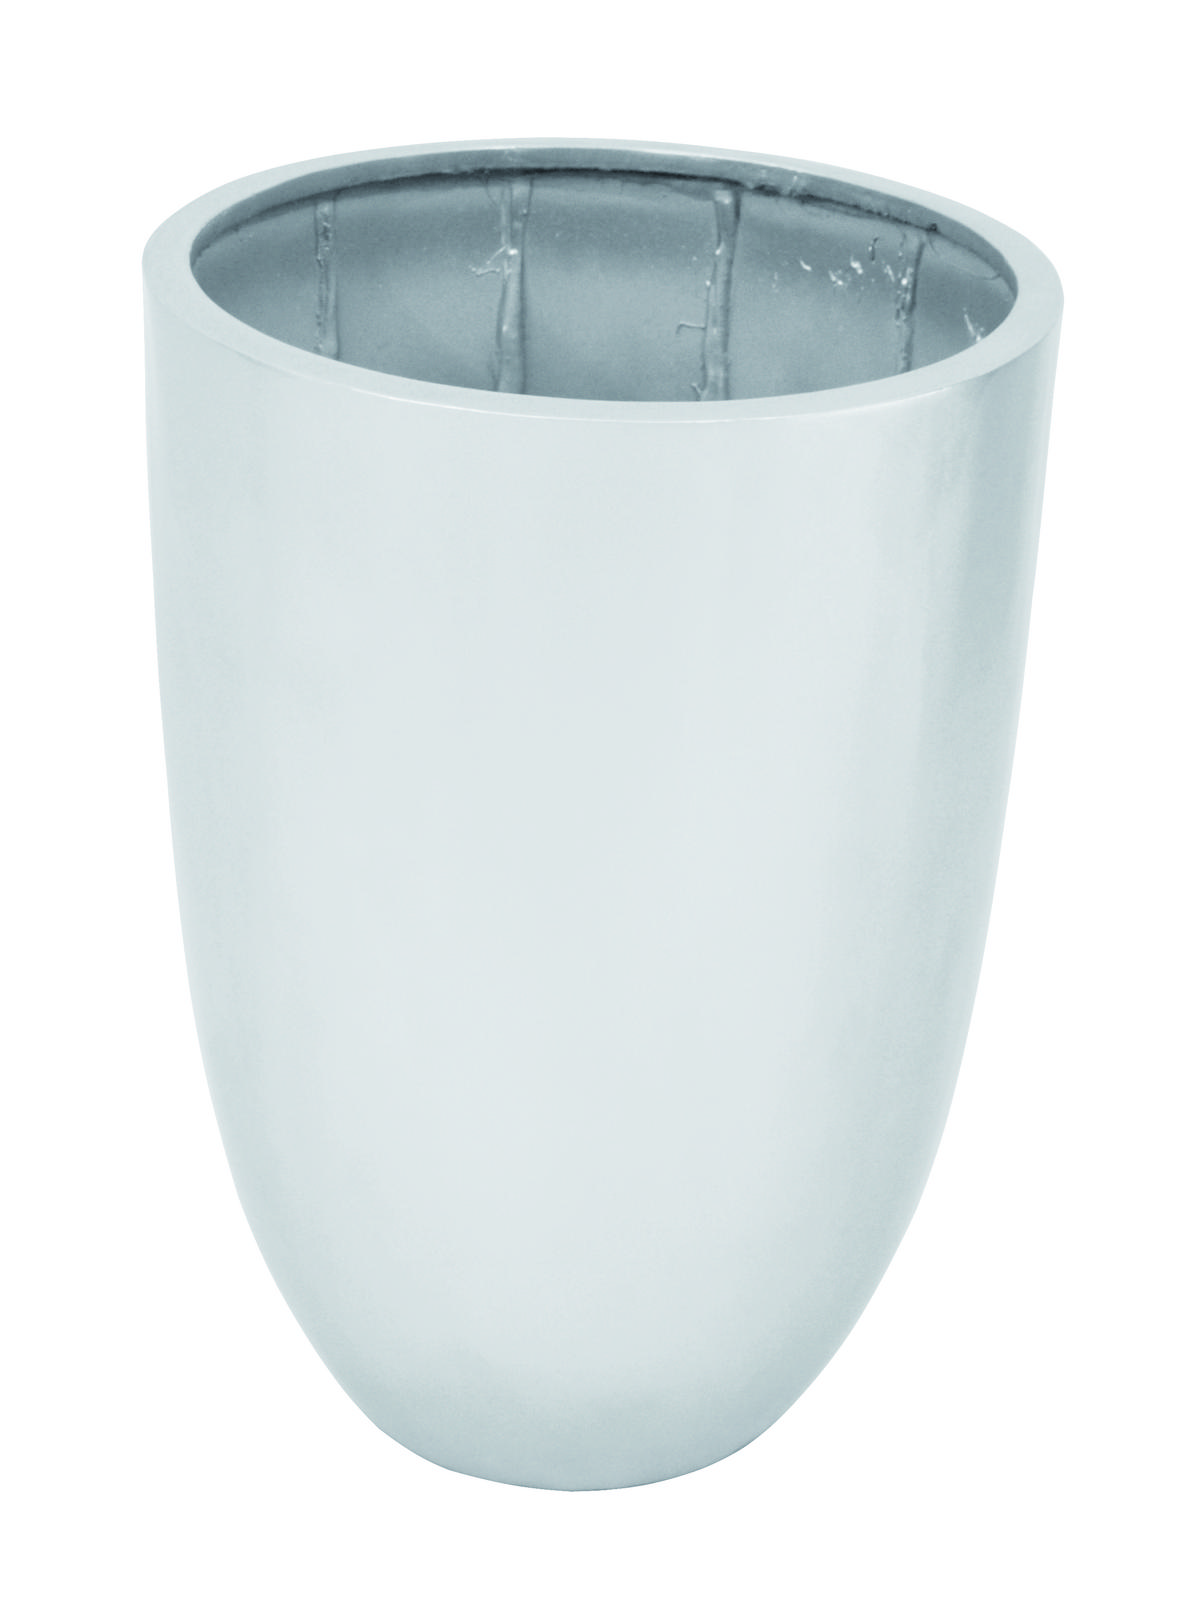 Květináč LEICHTSIN CUP-69, lesklý-stříbrný